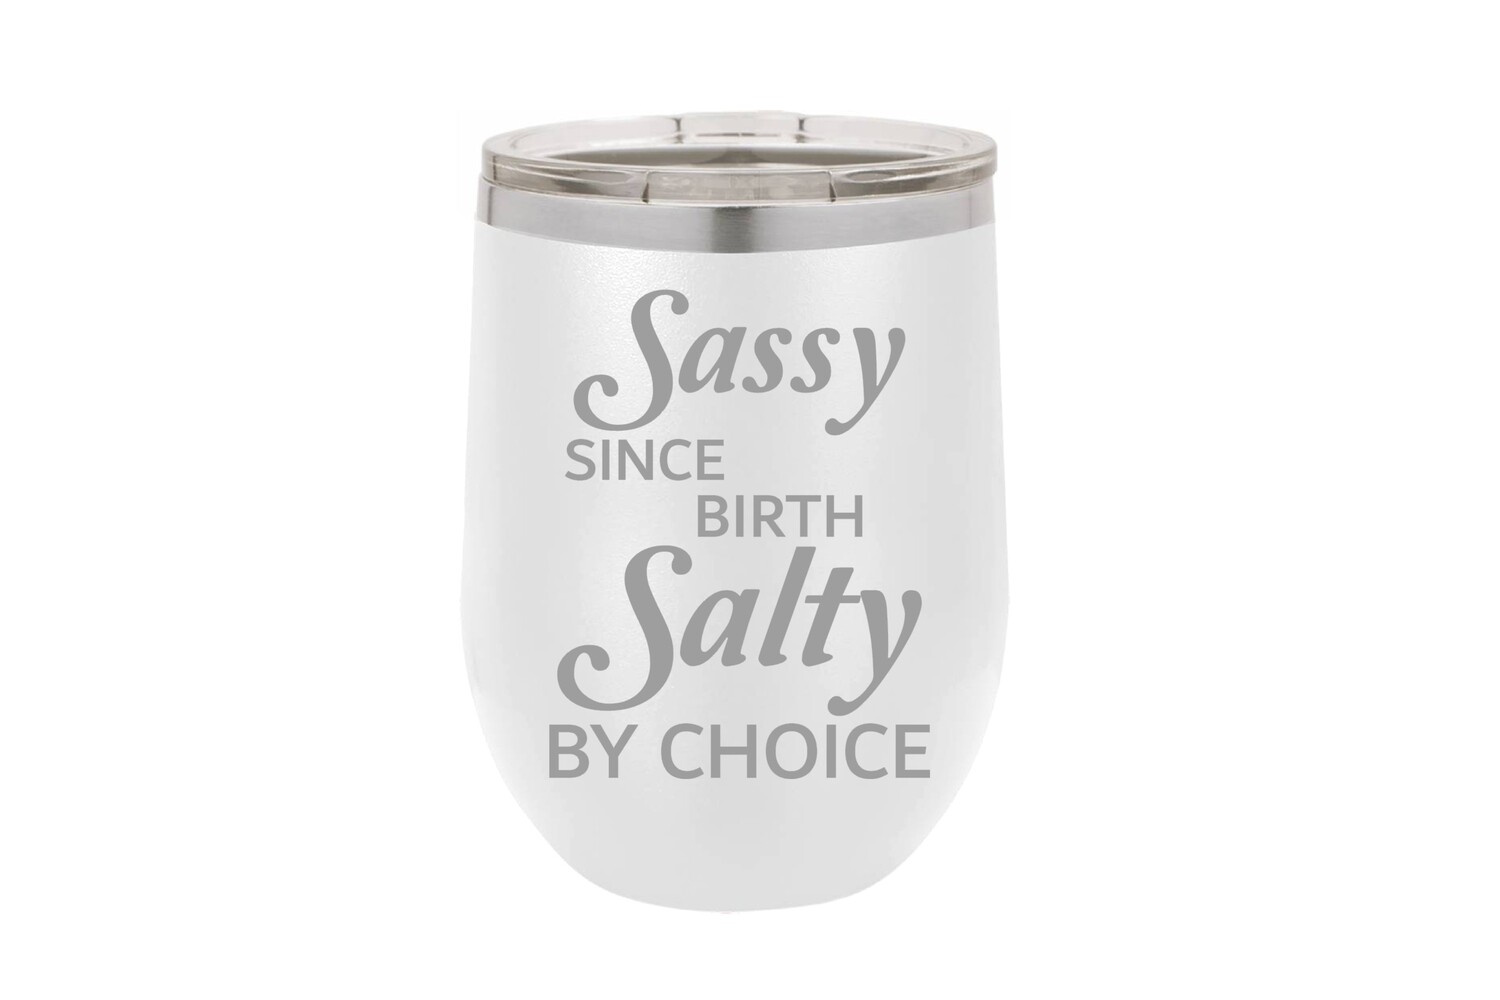 Sassy since Birth Salty by Choice Insulated Tumbler 12 oz